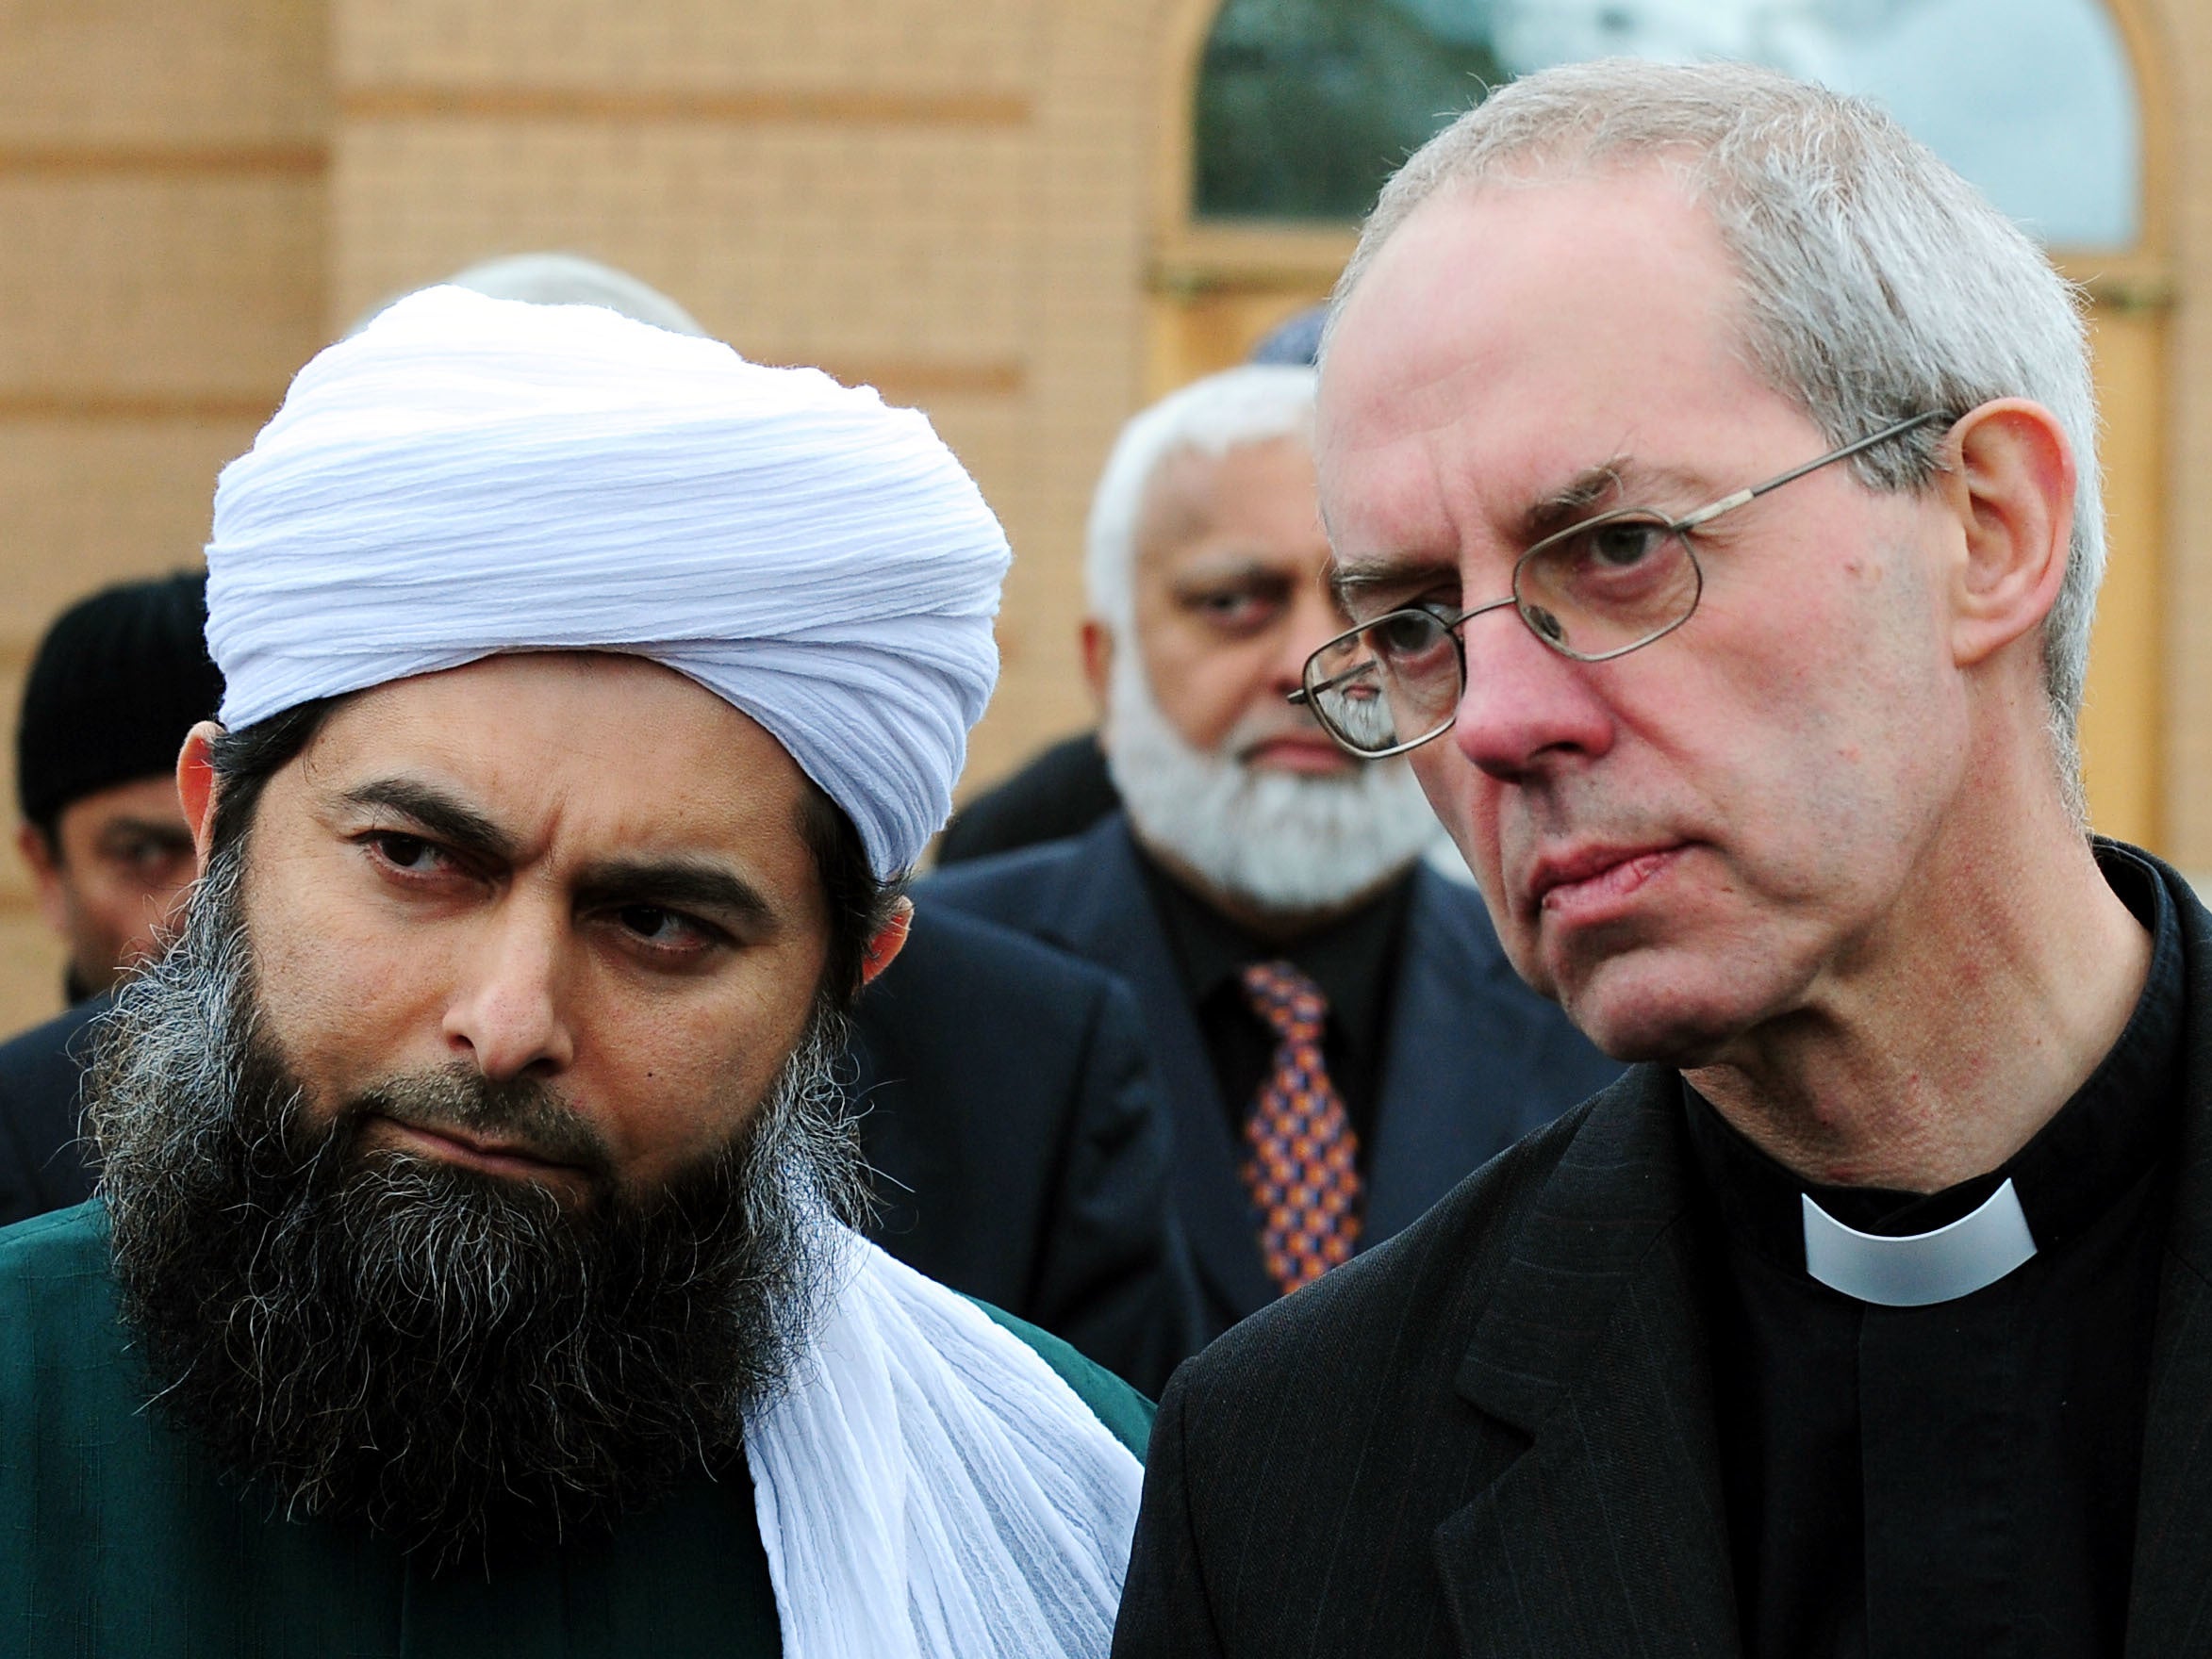 Senior imam Ibrahim Mogra alongside the Archbishop of Canterbury, Justin Welby